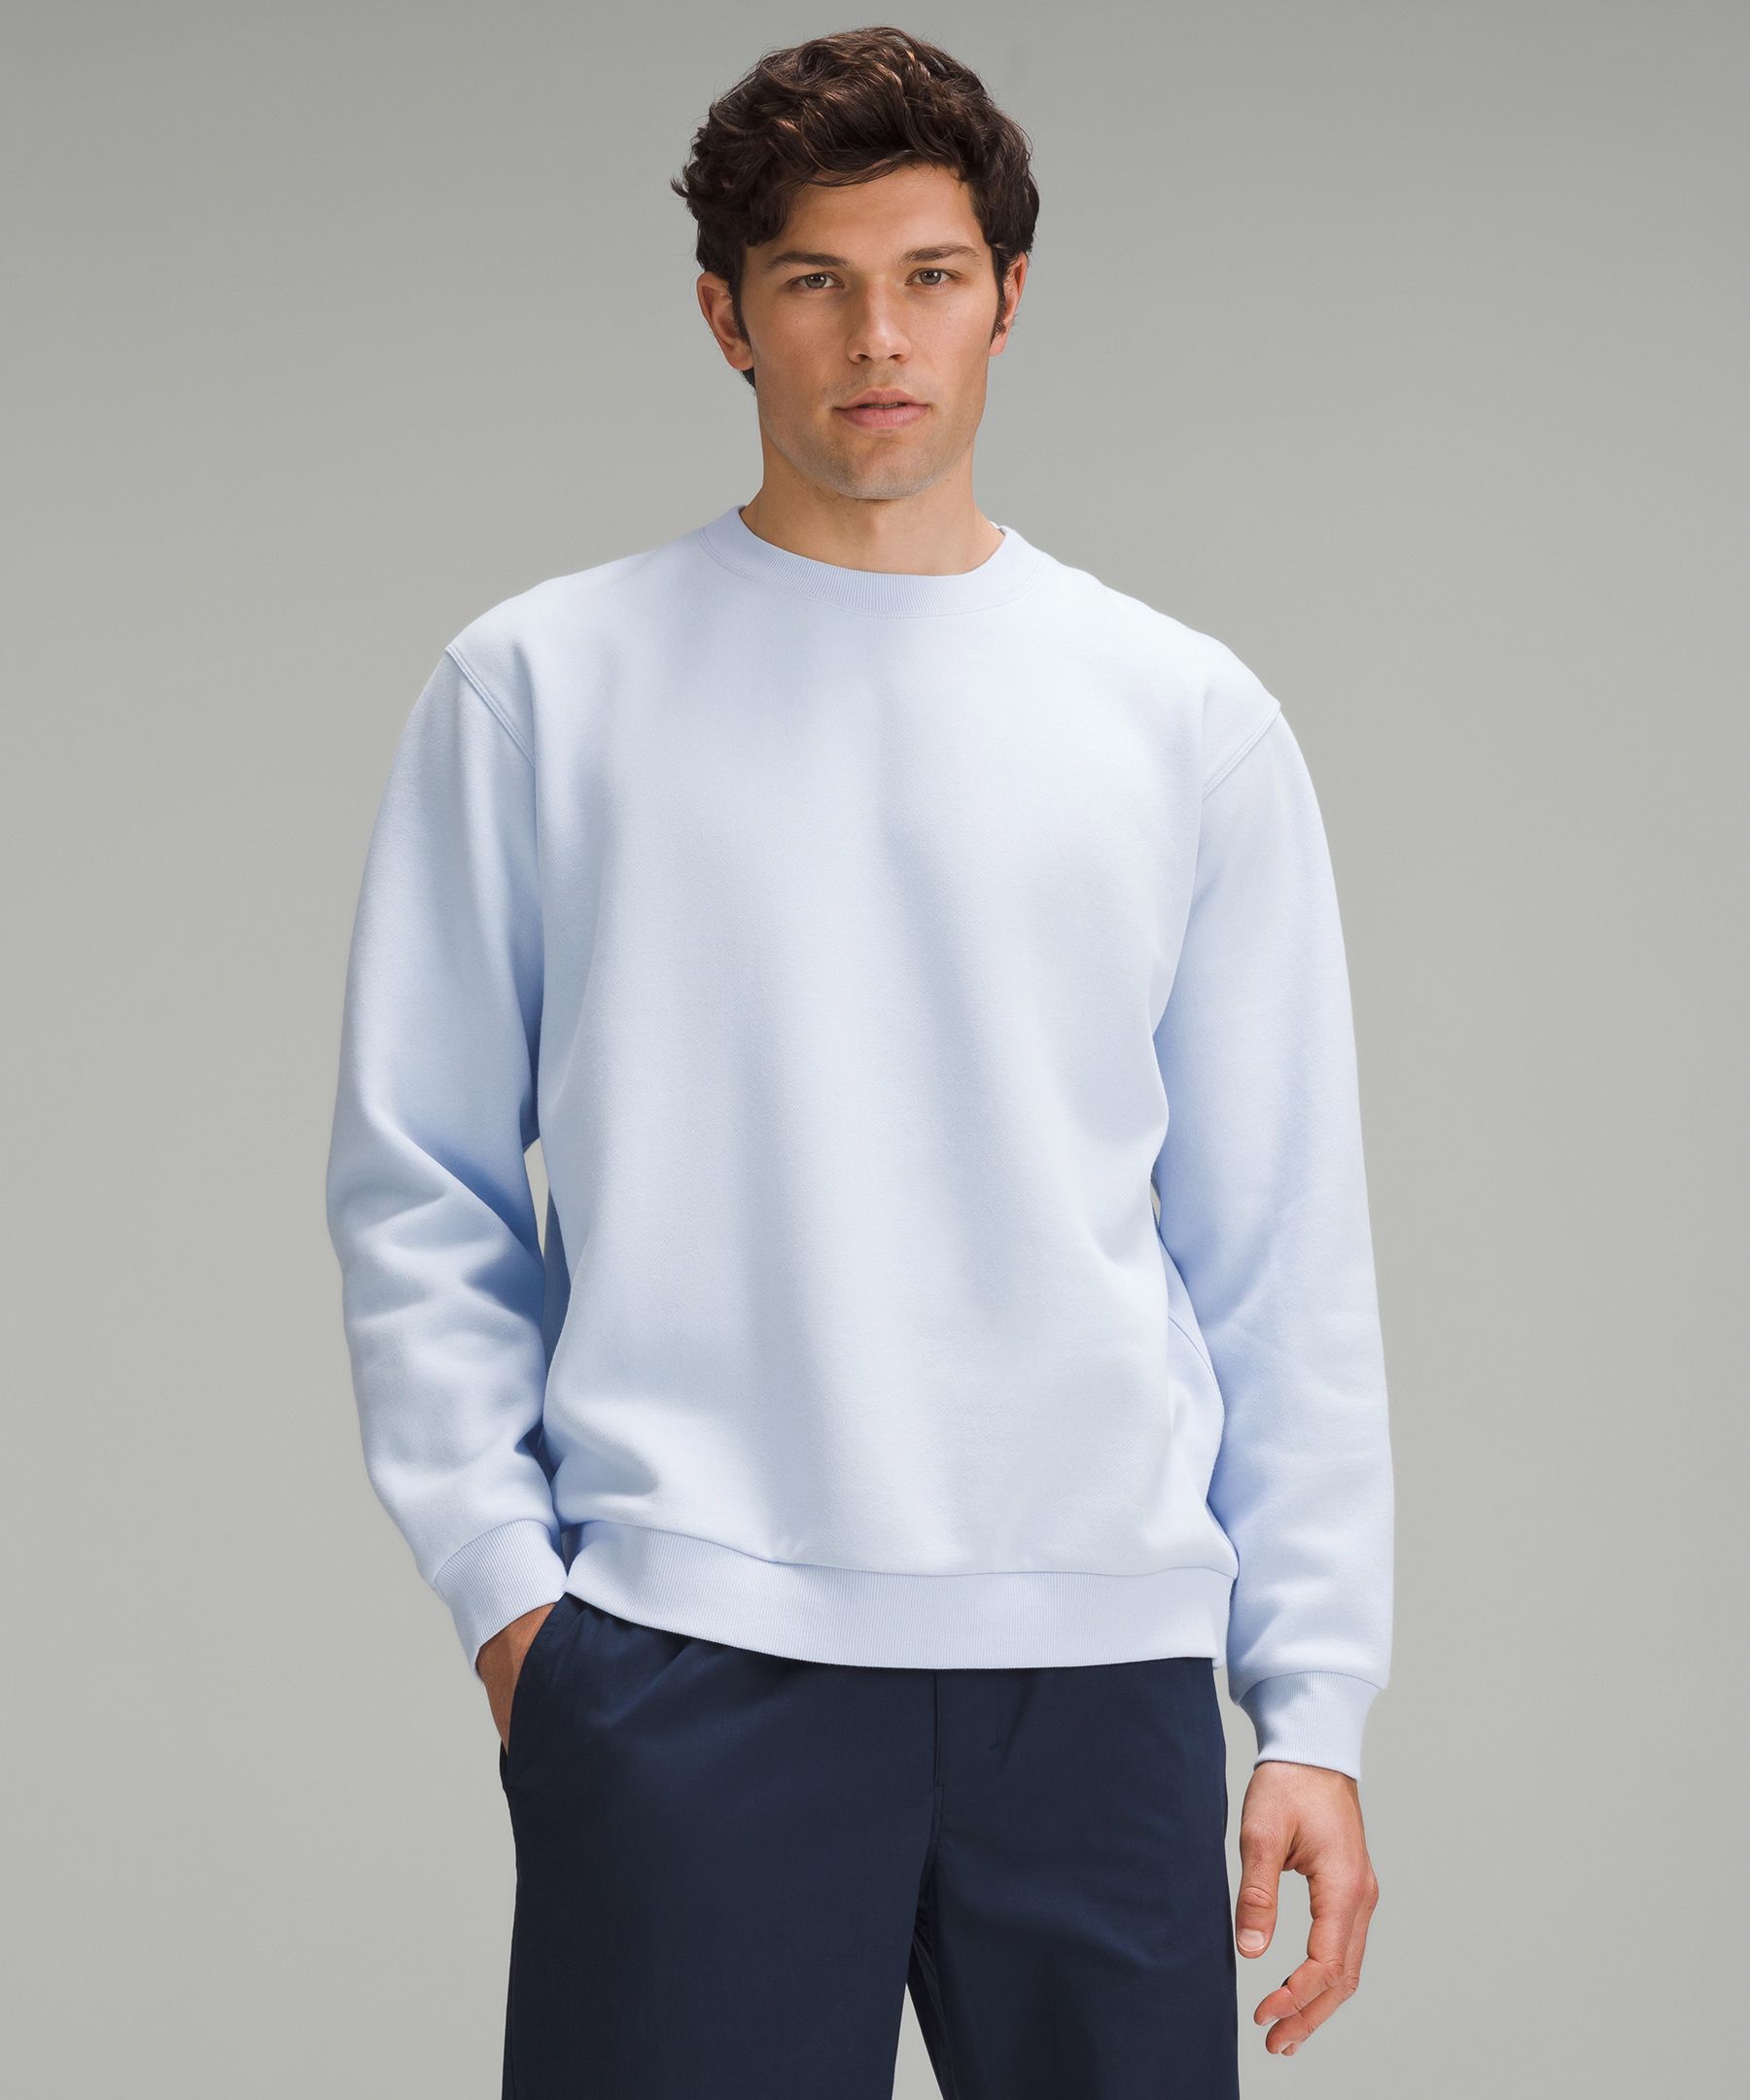 Lululemon Crew Neck Sweatshirt Blue Size 8 - $102 (13% Off Retail